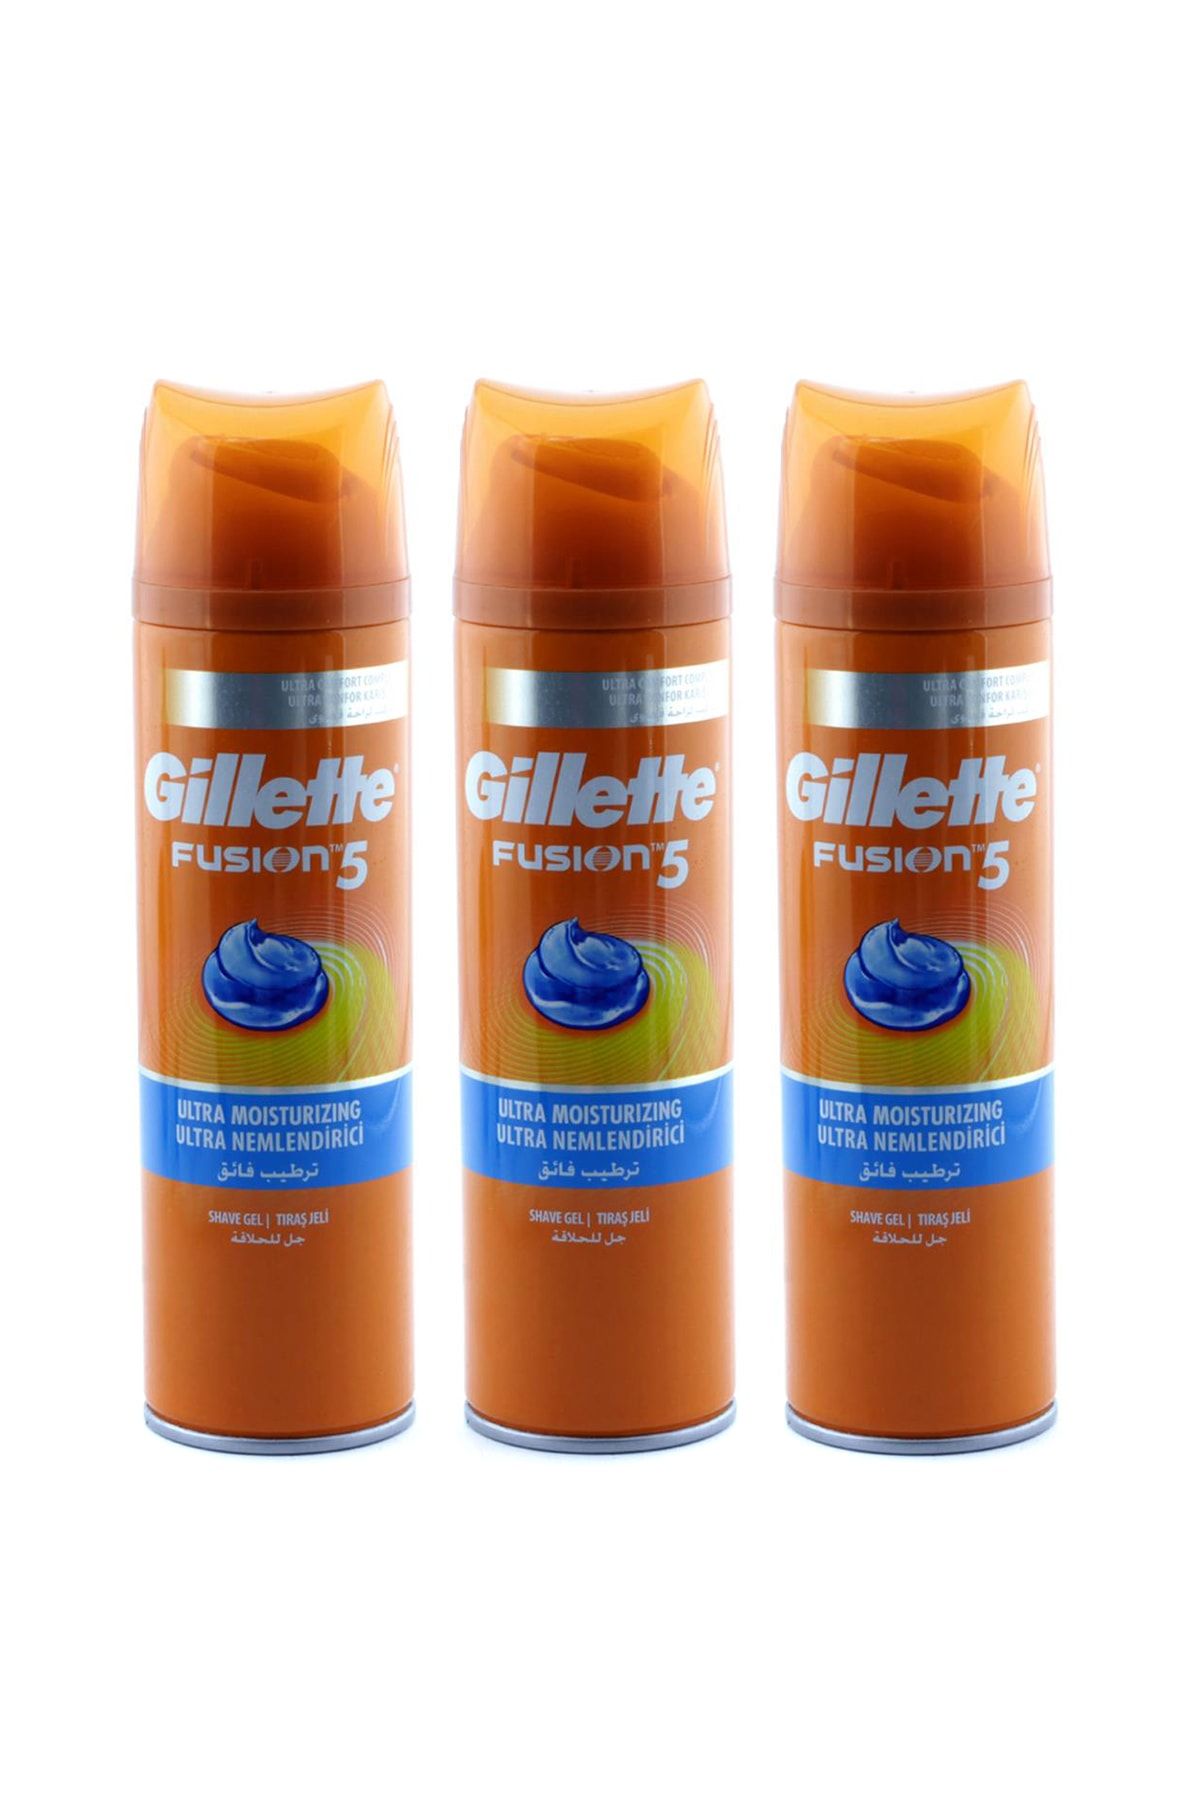 Gillette Ultra Nemlendirici Tıraş Jeli Fusion 5 200 ml x 3